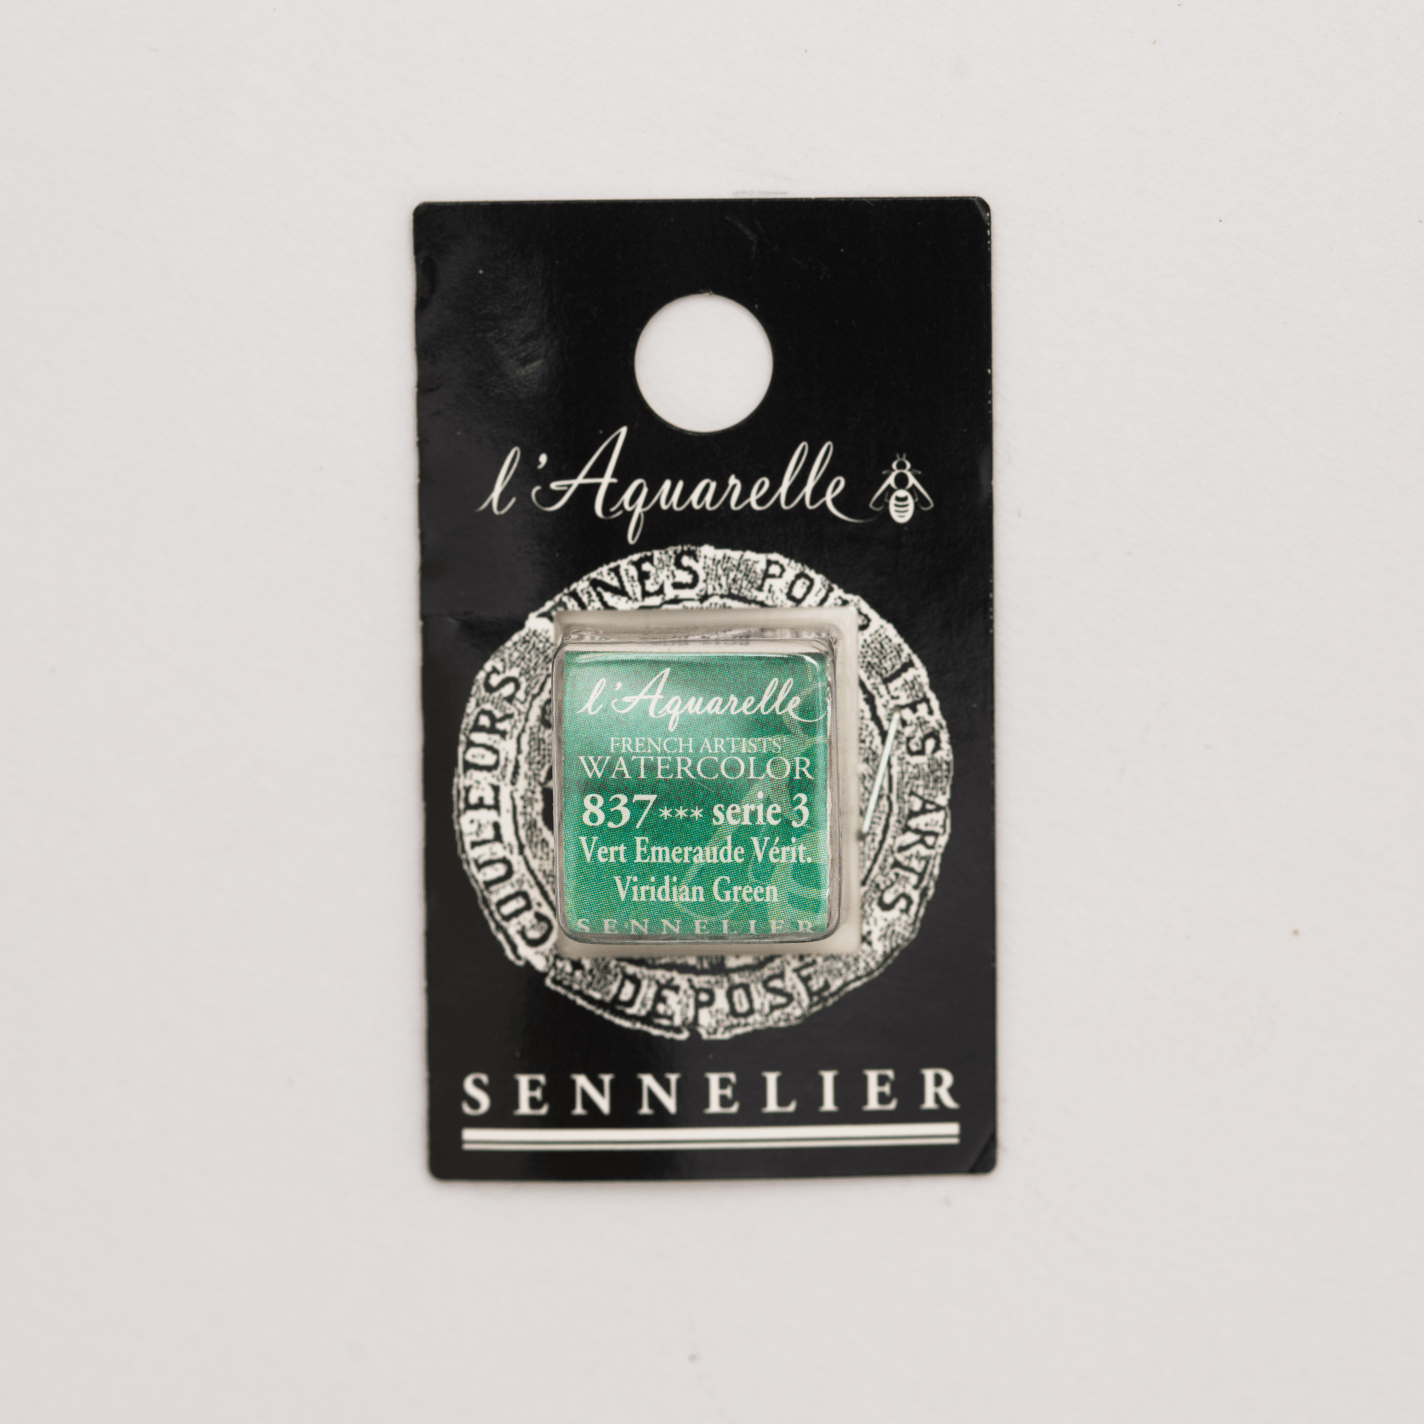 Sennelier Aquarelle pans 1/2 pan Viridian Green